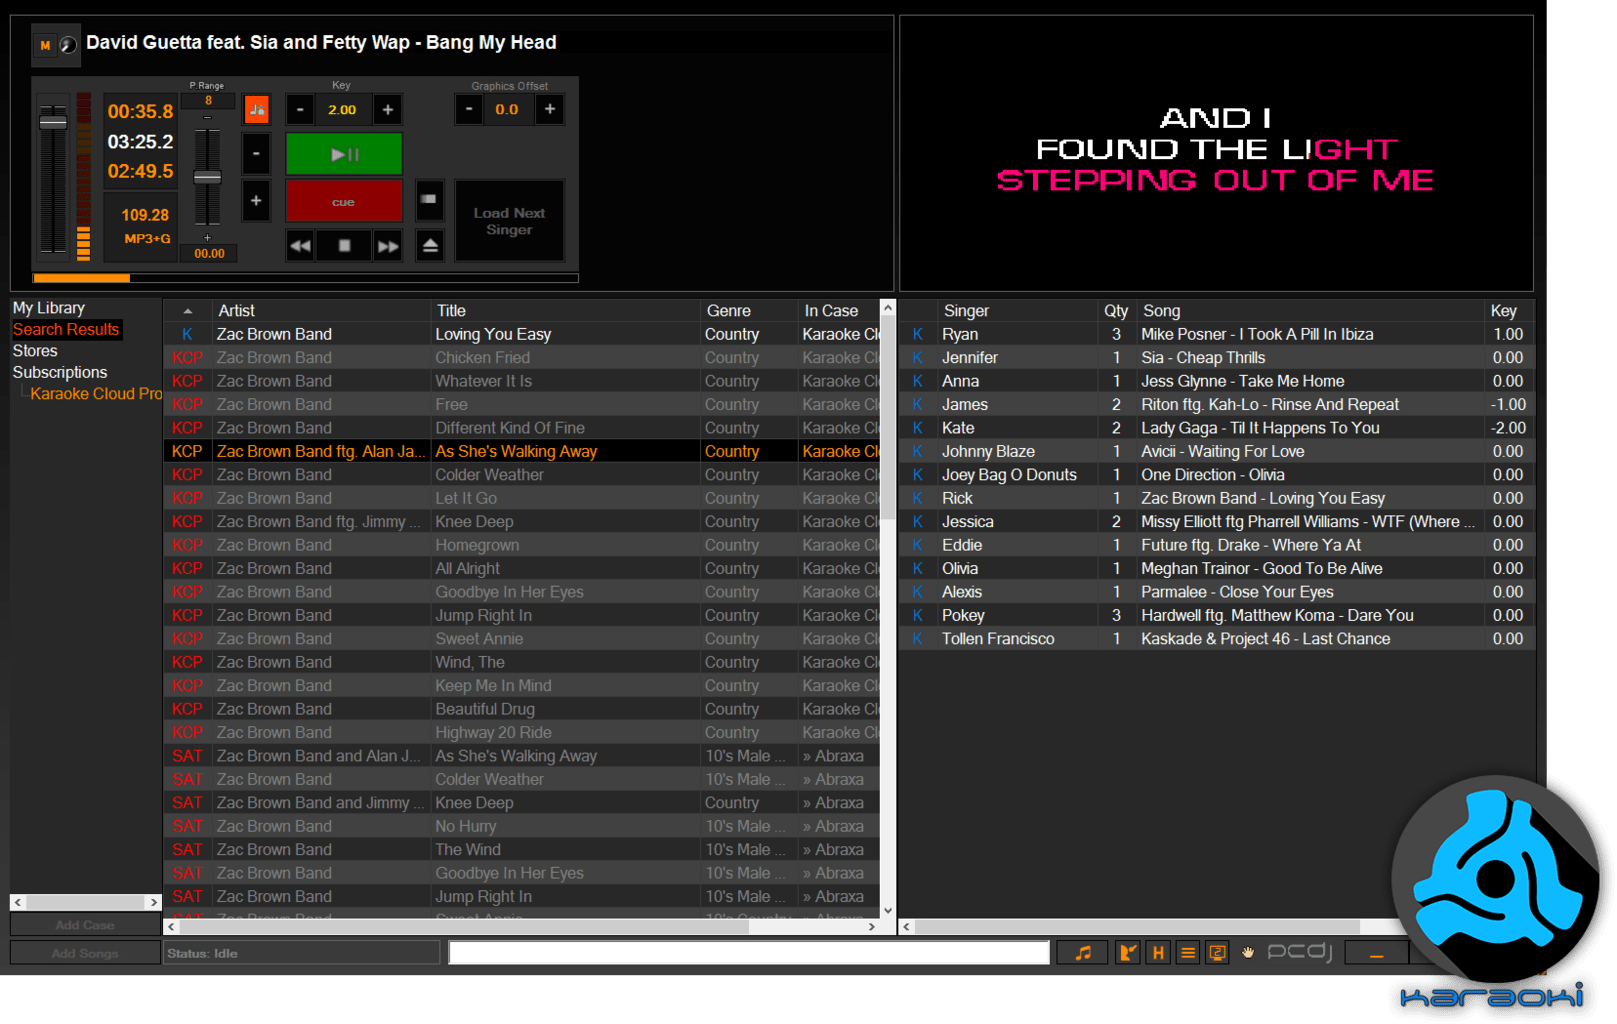 PCDJ karaoke programvare for Windows PC